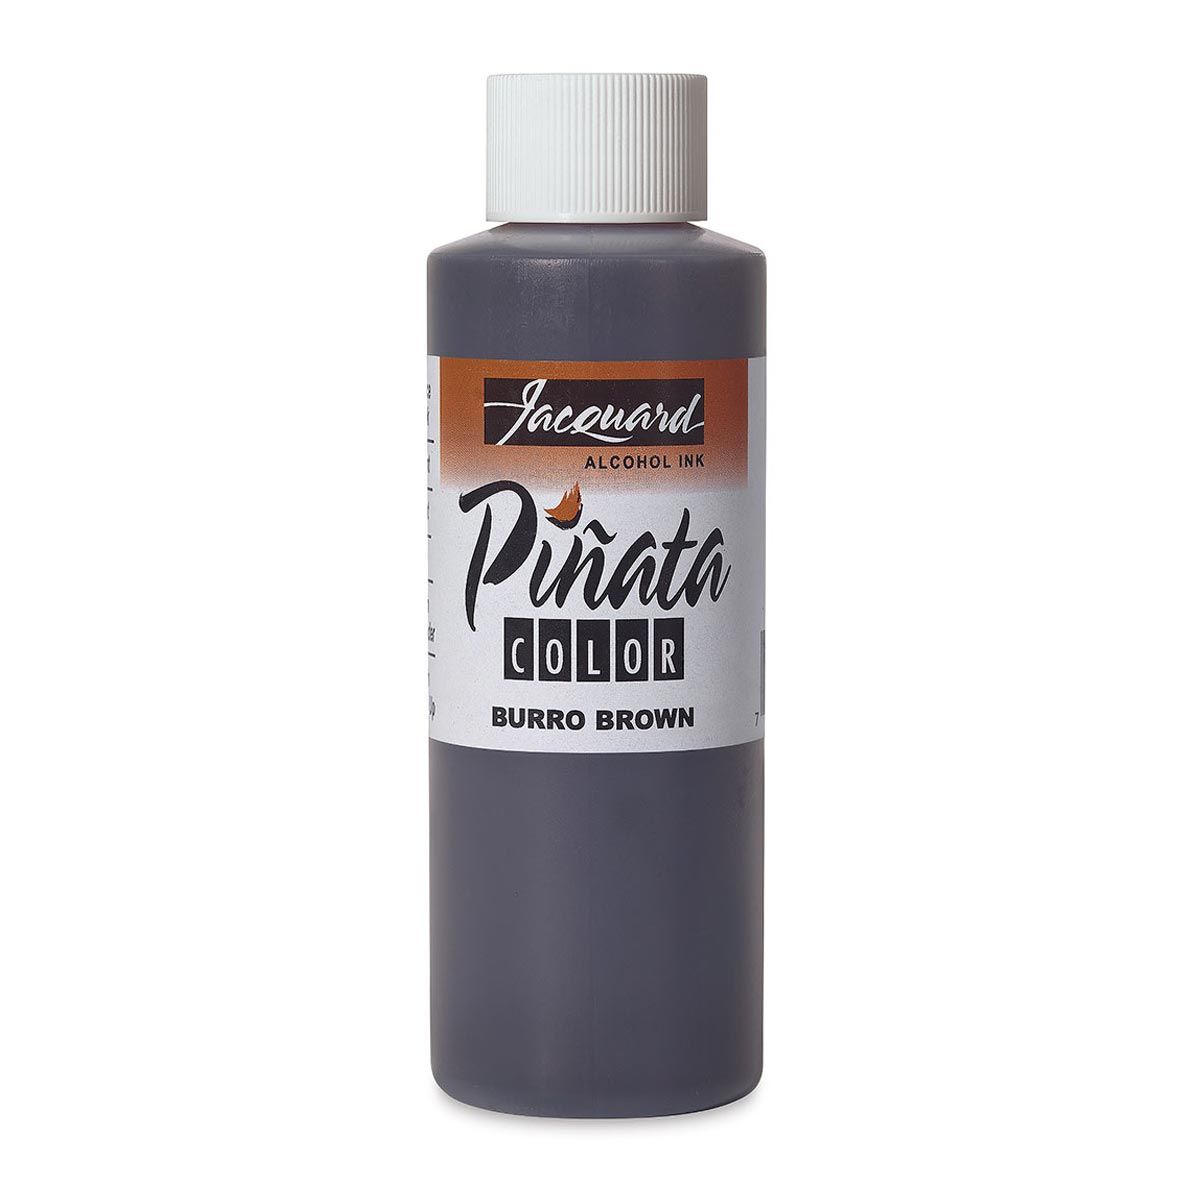 Piñata Color Alcohol Ink - Burro Brown 4-ounce